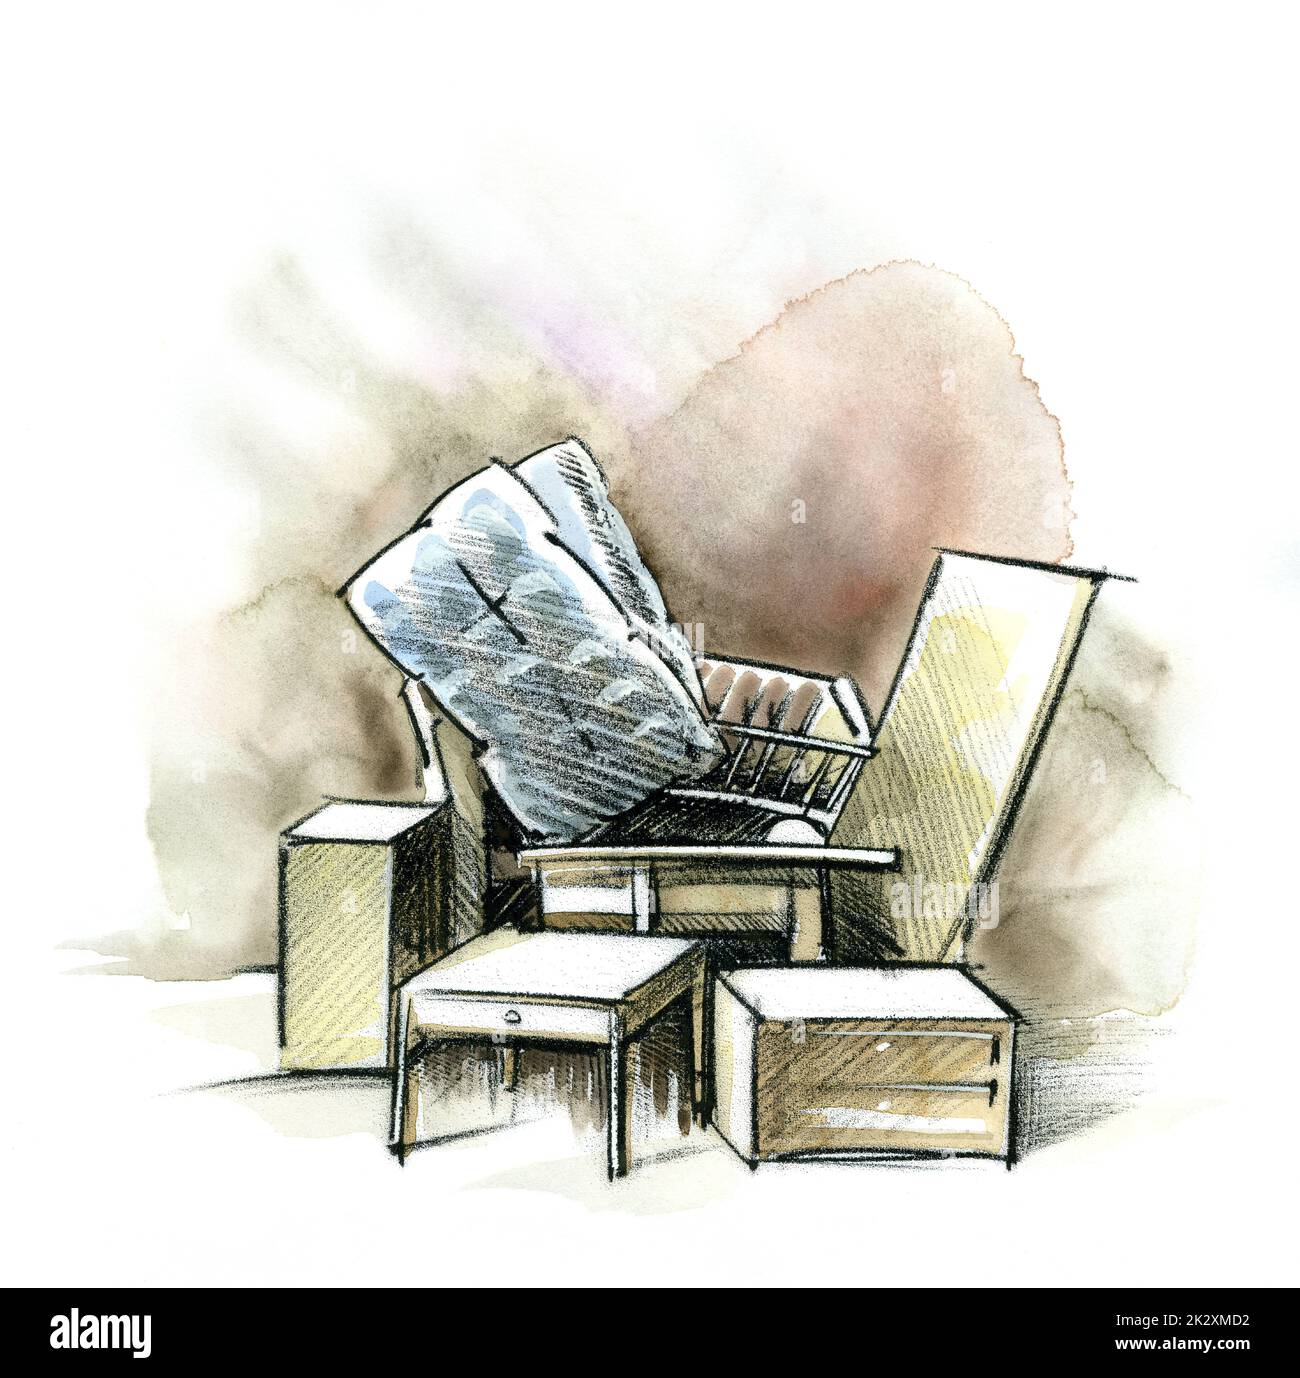 Bulky waste illustration Stock Photo